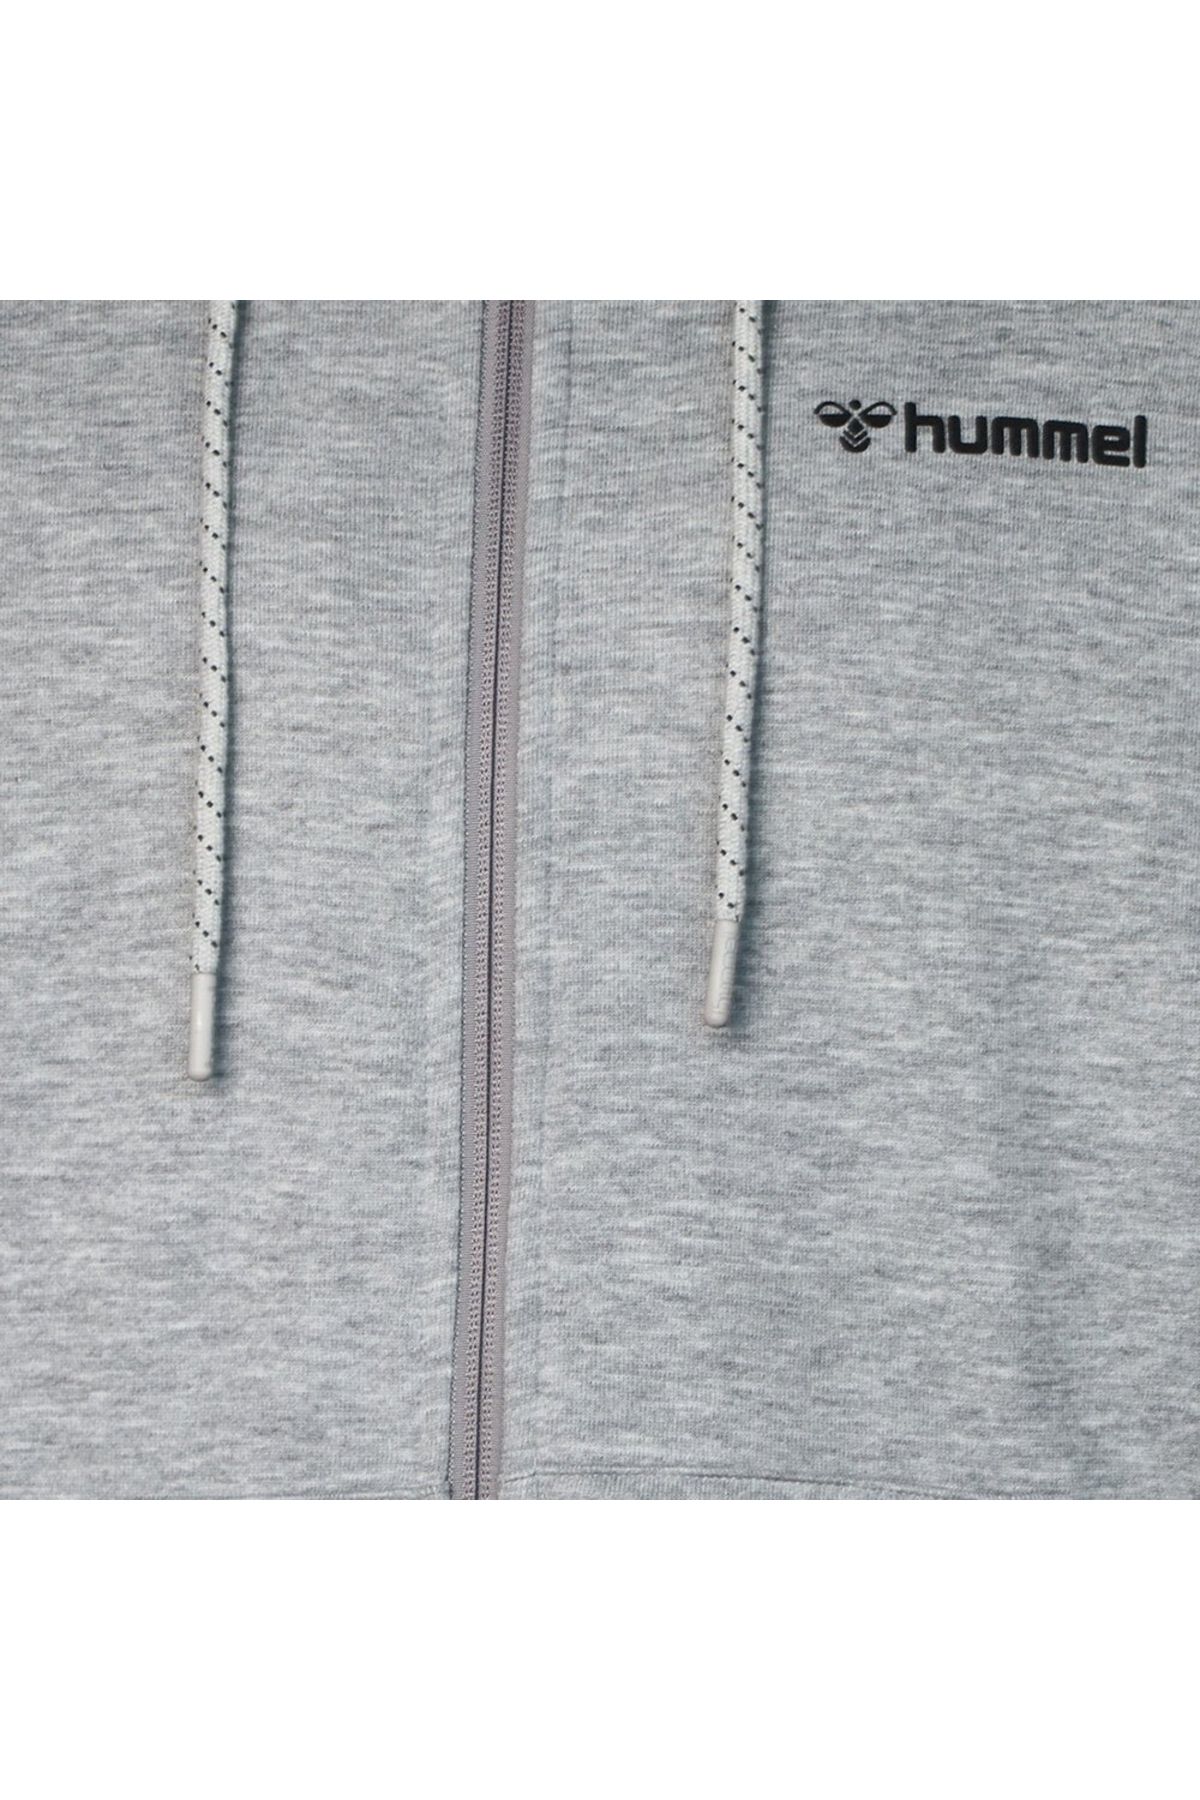 hummel 921583-2007 عرق مردانه